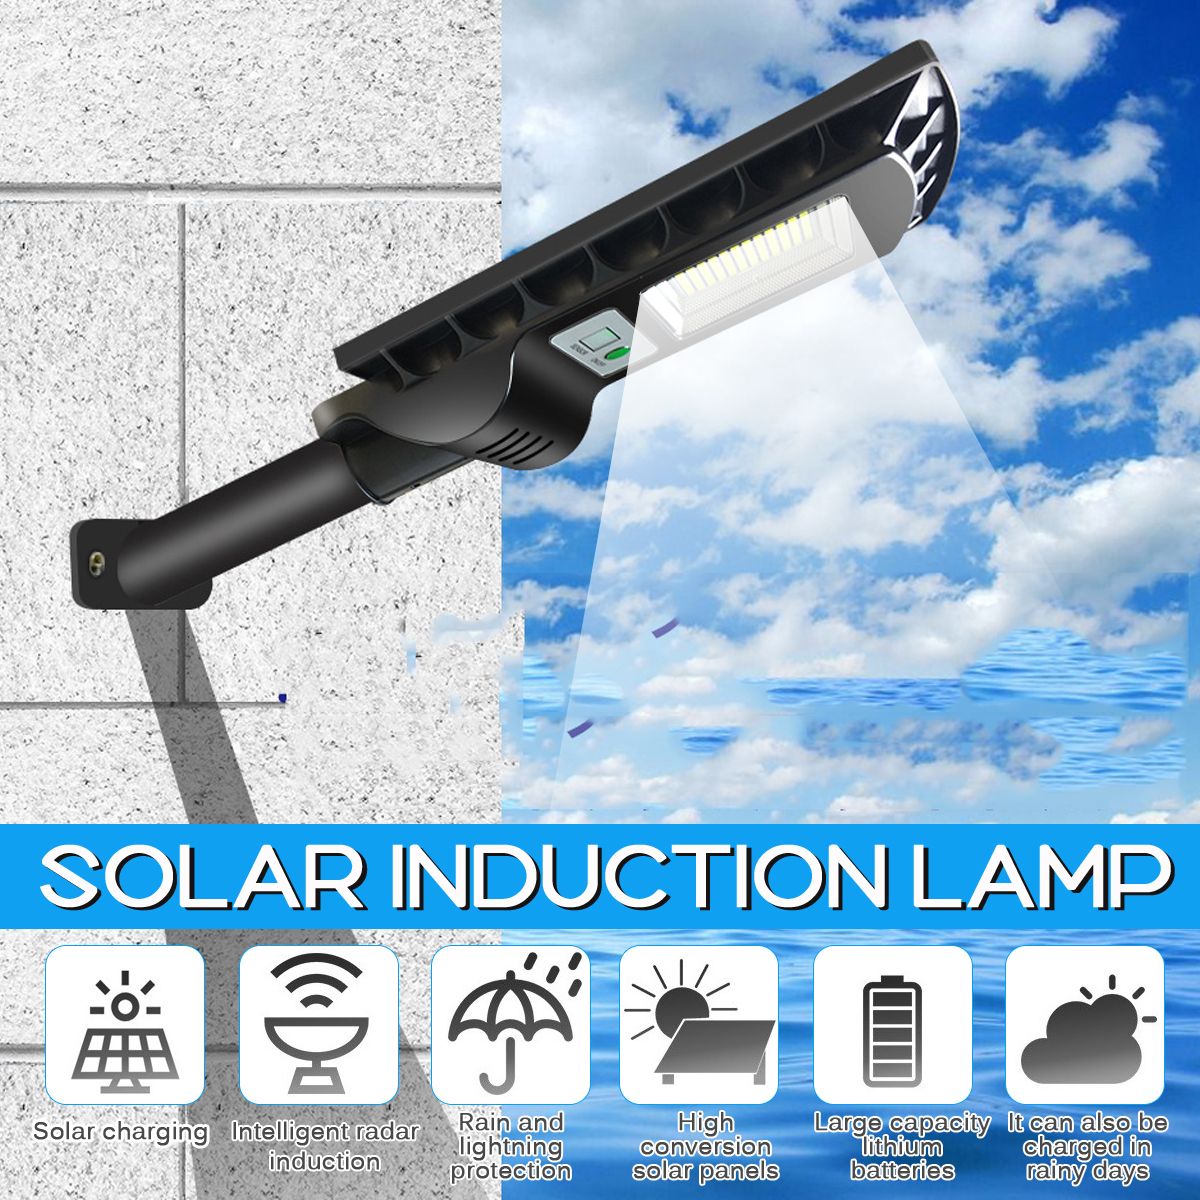 180-LED-Solar-Light-PIR-Motion-Sensor-Outdoor-Garden-Yard-Wall-Road-Street-Lamp-Waterproof-1741212